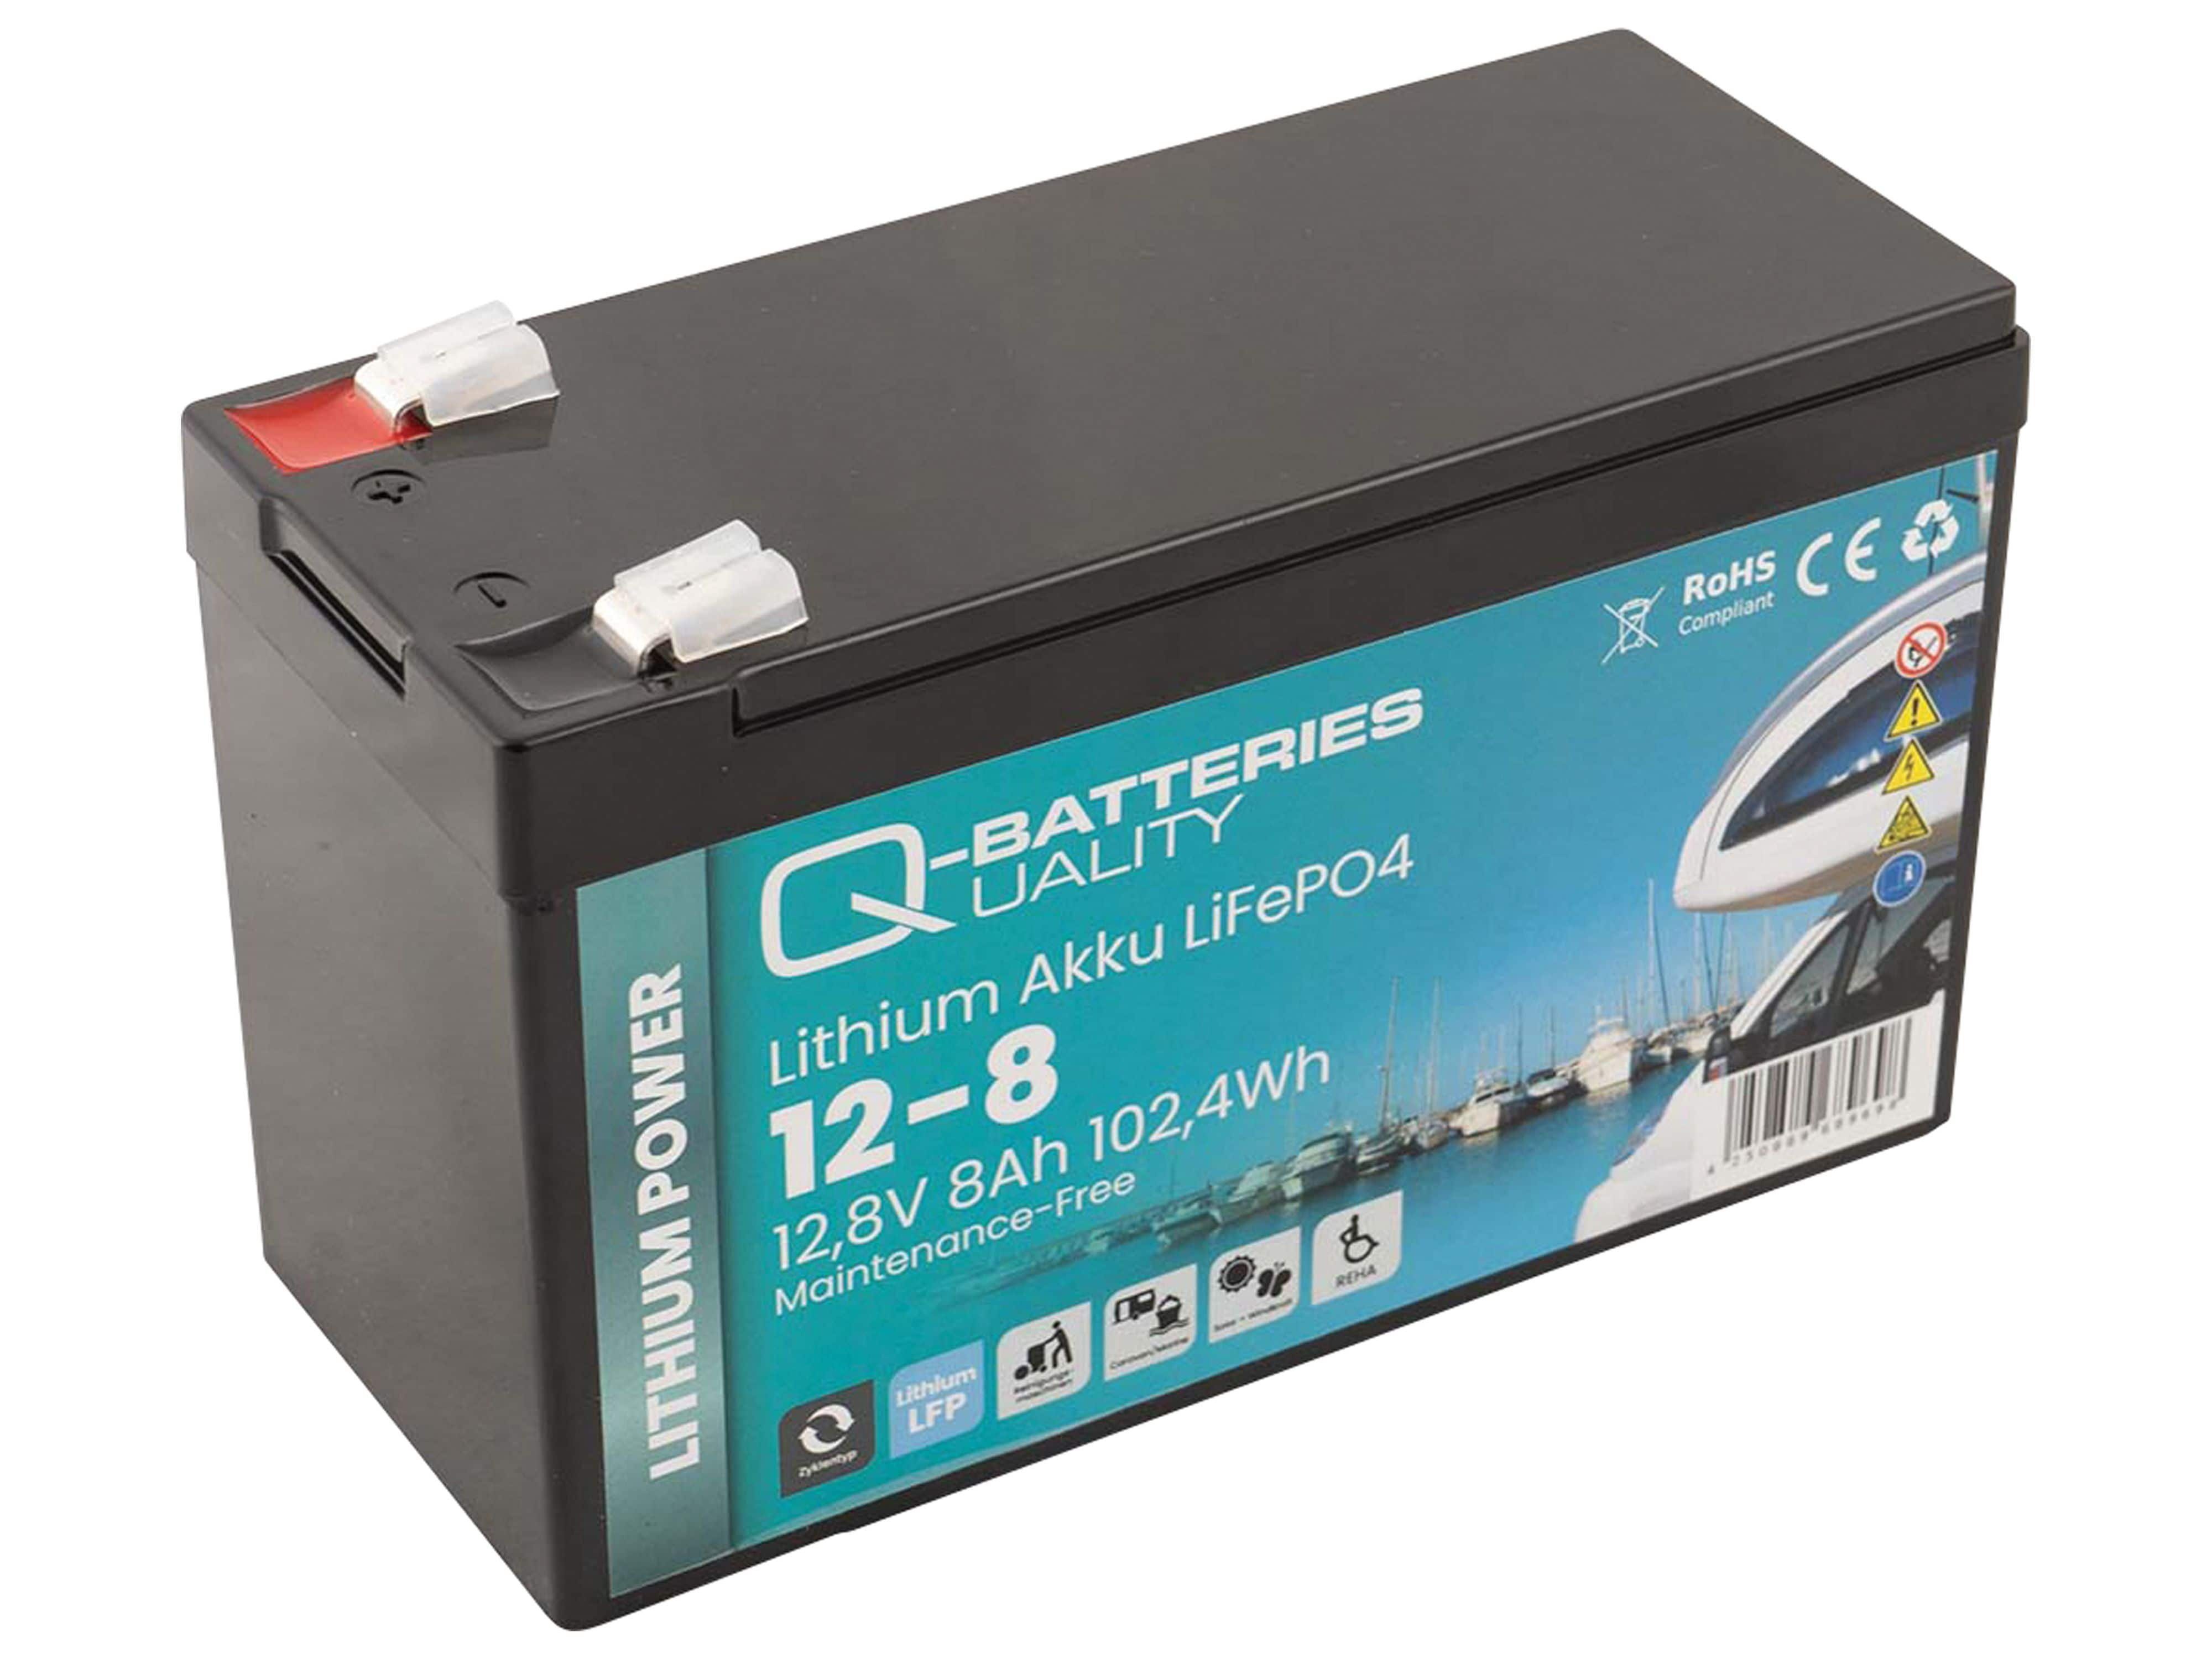 Batterie 12,8V Lithium 102,4Wh Akku Q-BATTERIES 12-8 Q-Batteries 8Ah,